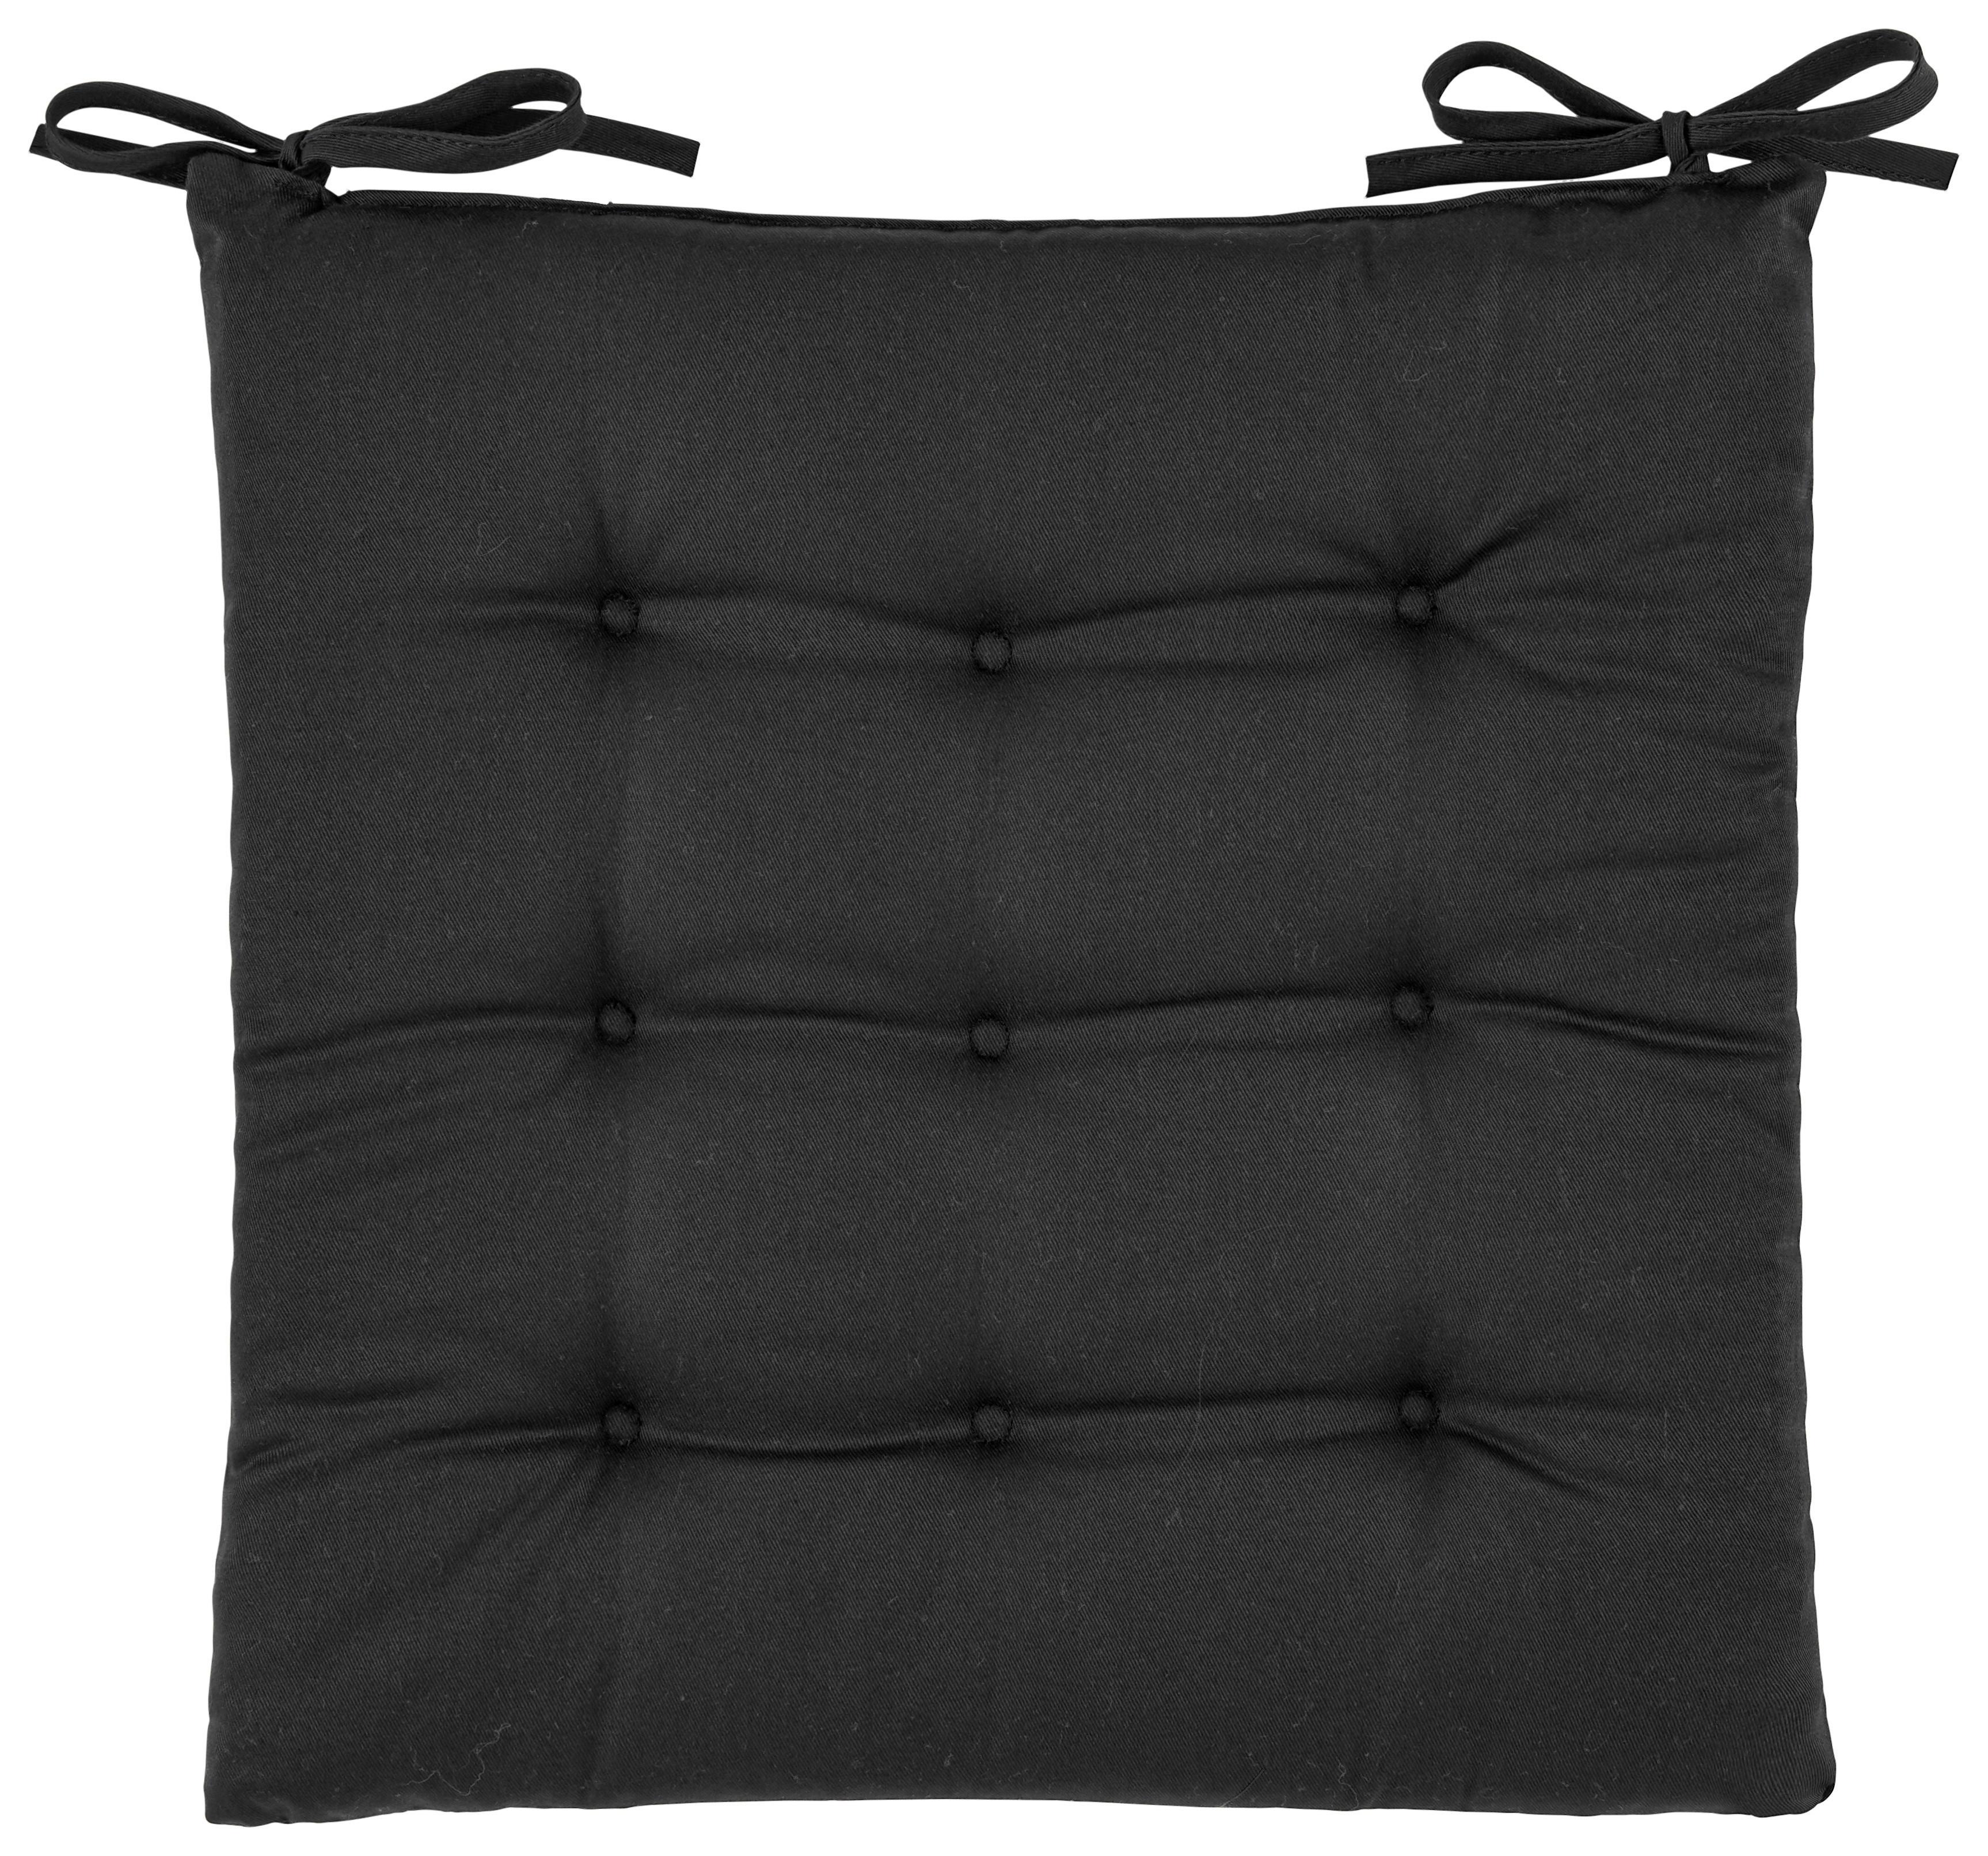 Schwarzes Sitzkissen aus Nylon.